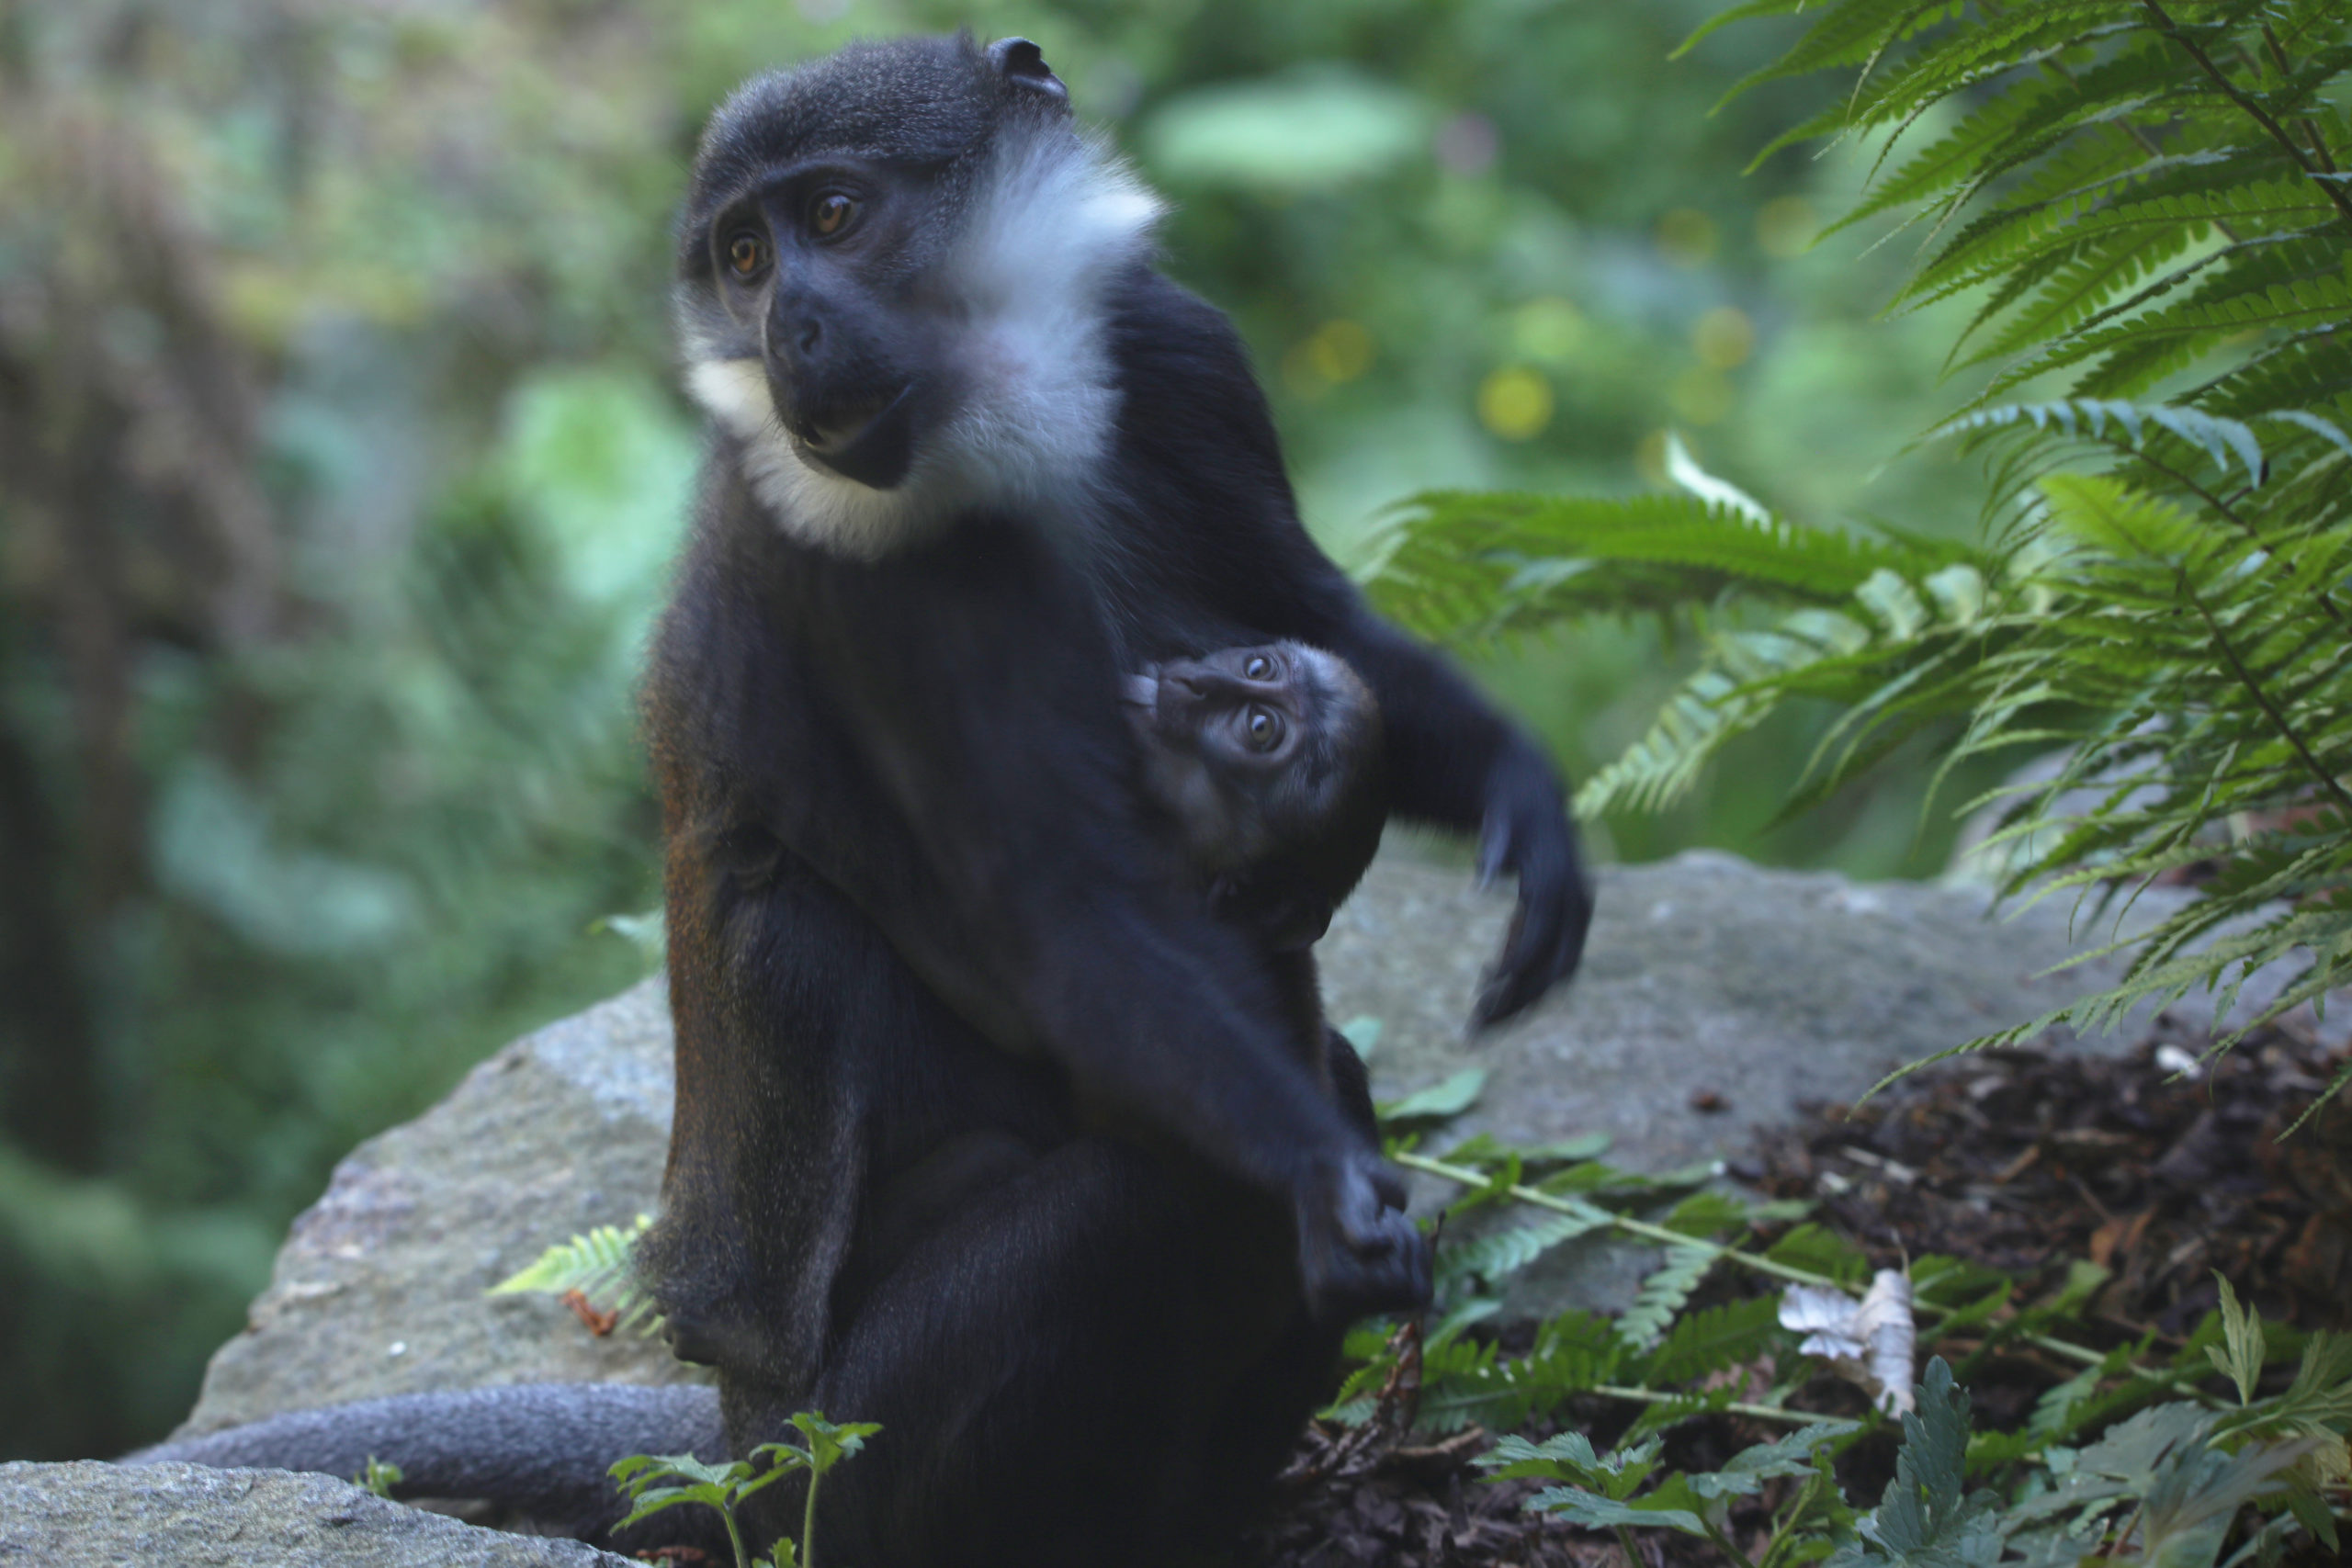 Mum Sheli with baby monkey at Edinburgh Zoo which reopens tomorrow